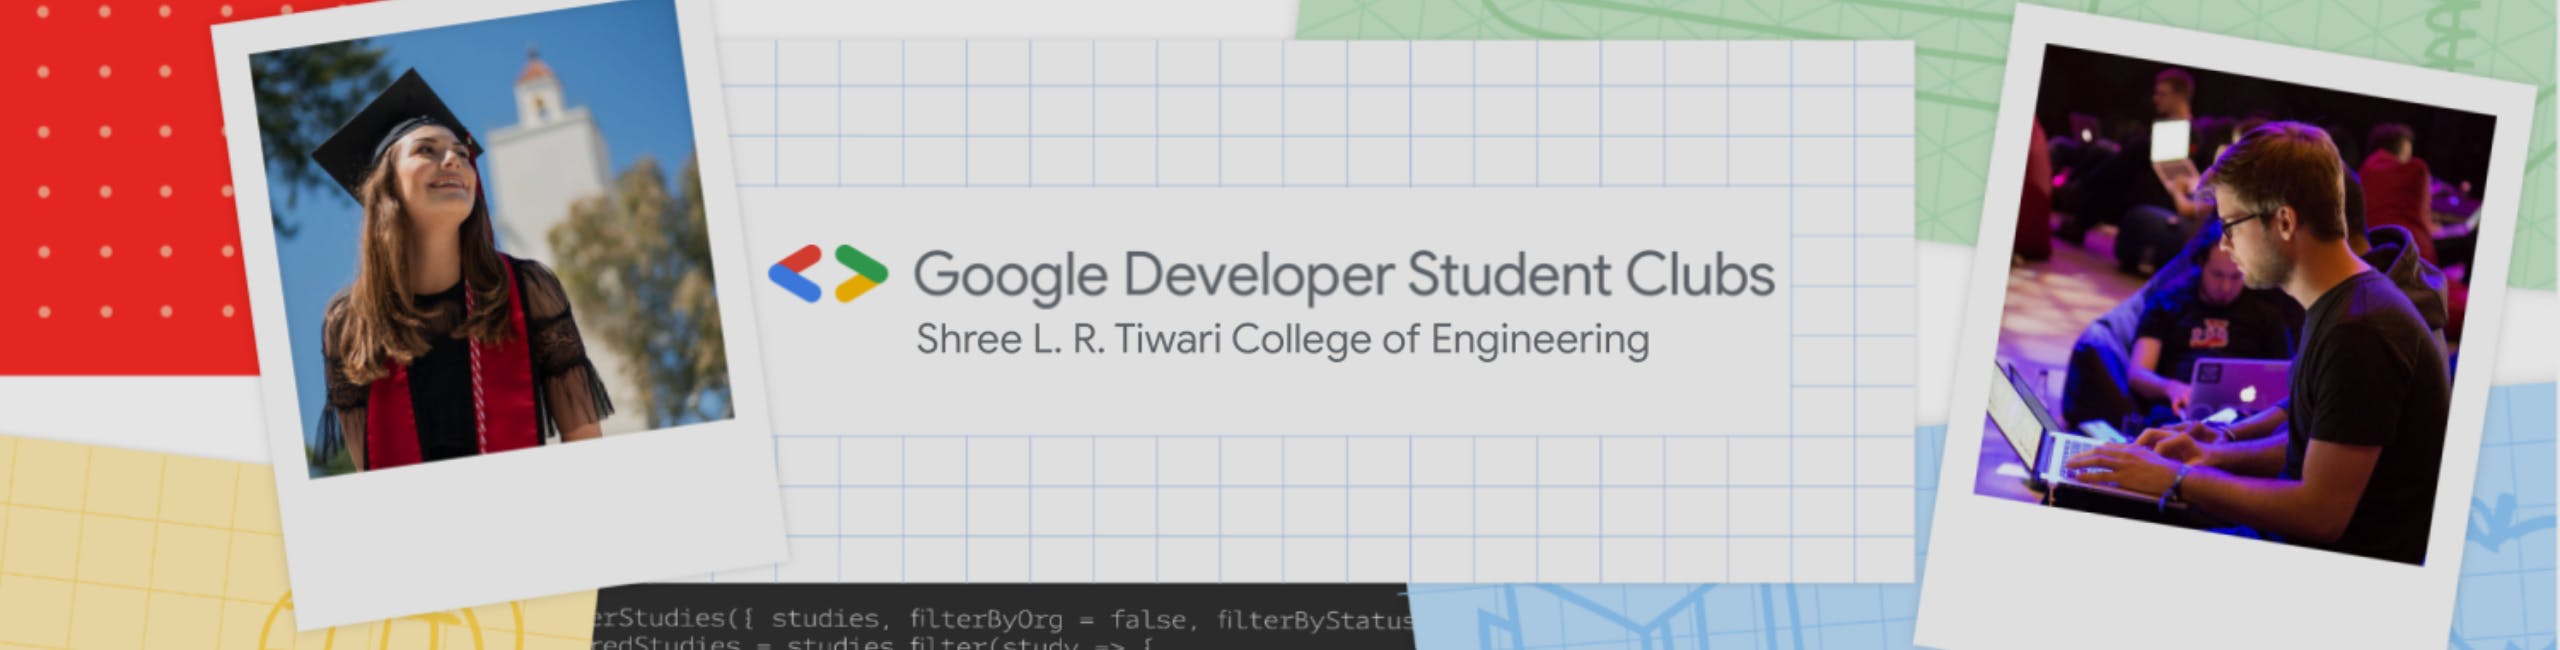 Google Developer Student Clubs Shree L R Tiwari College of Engineering